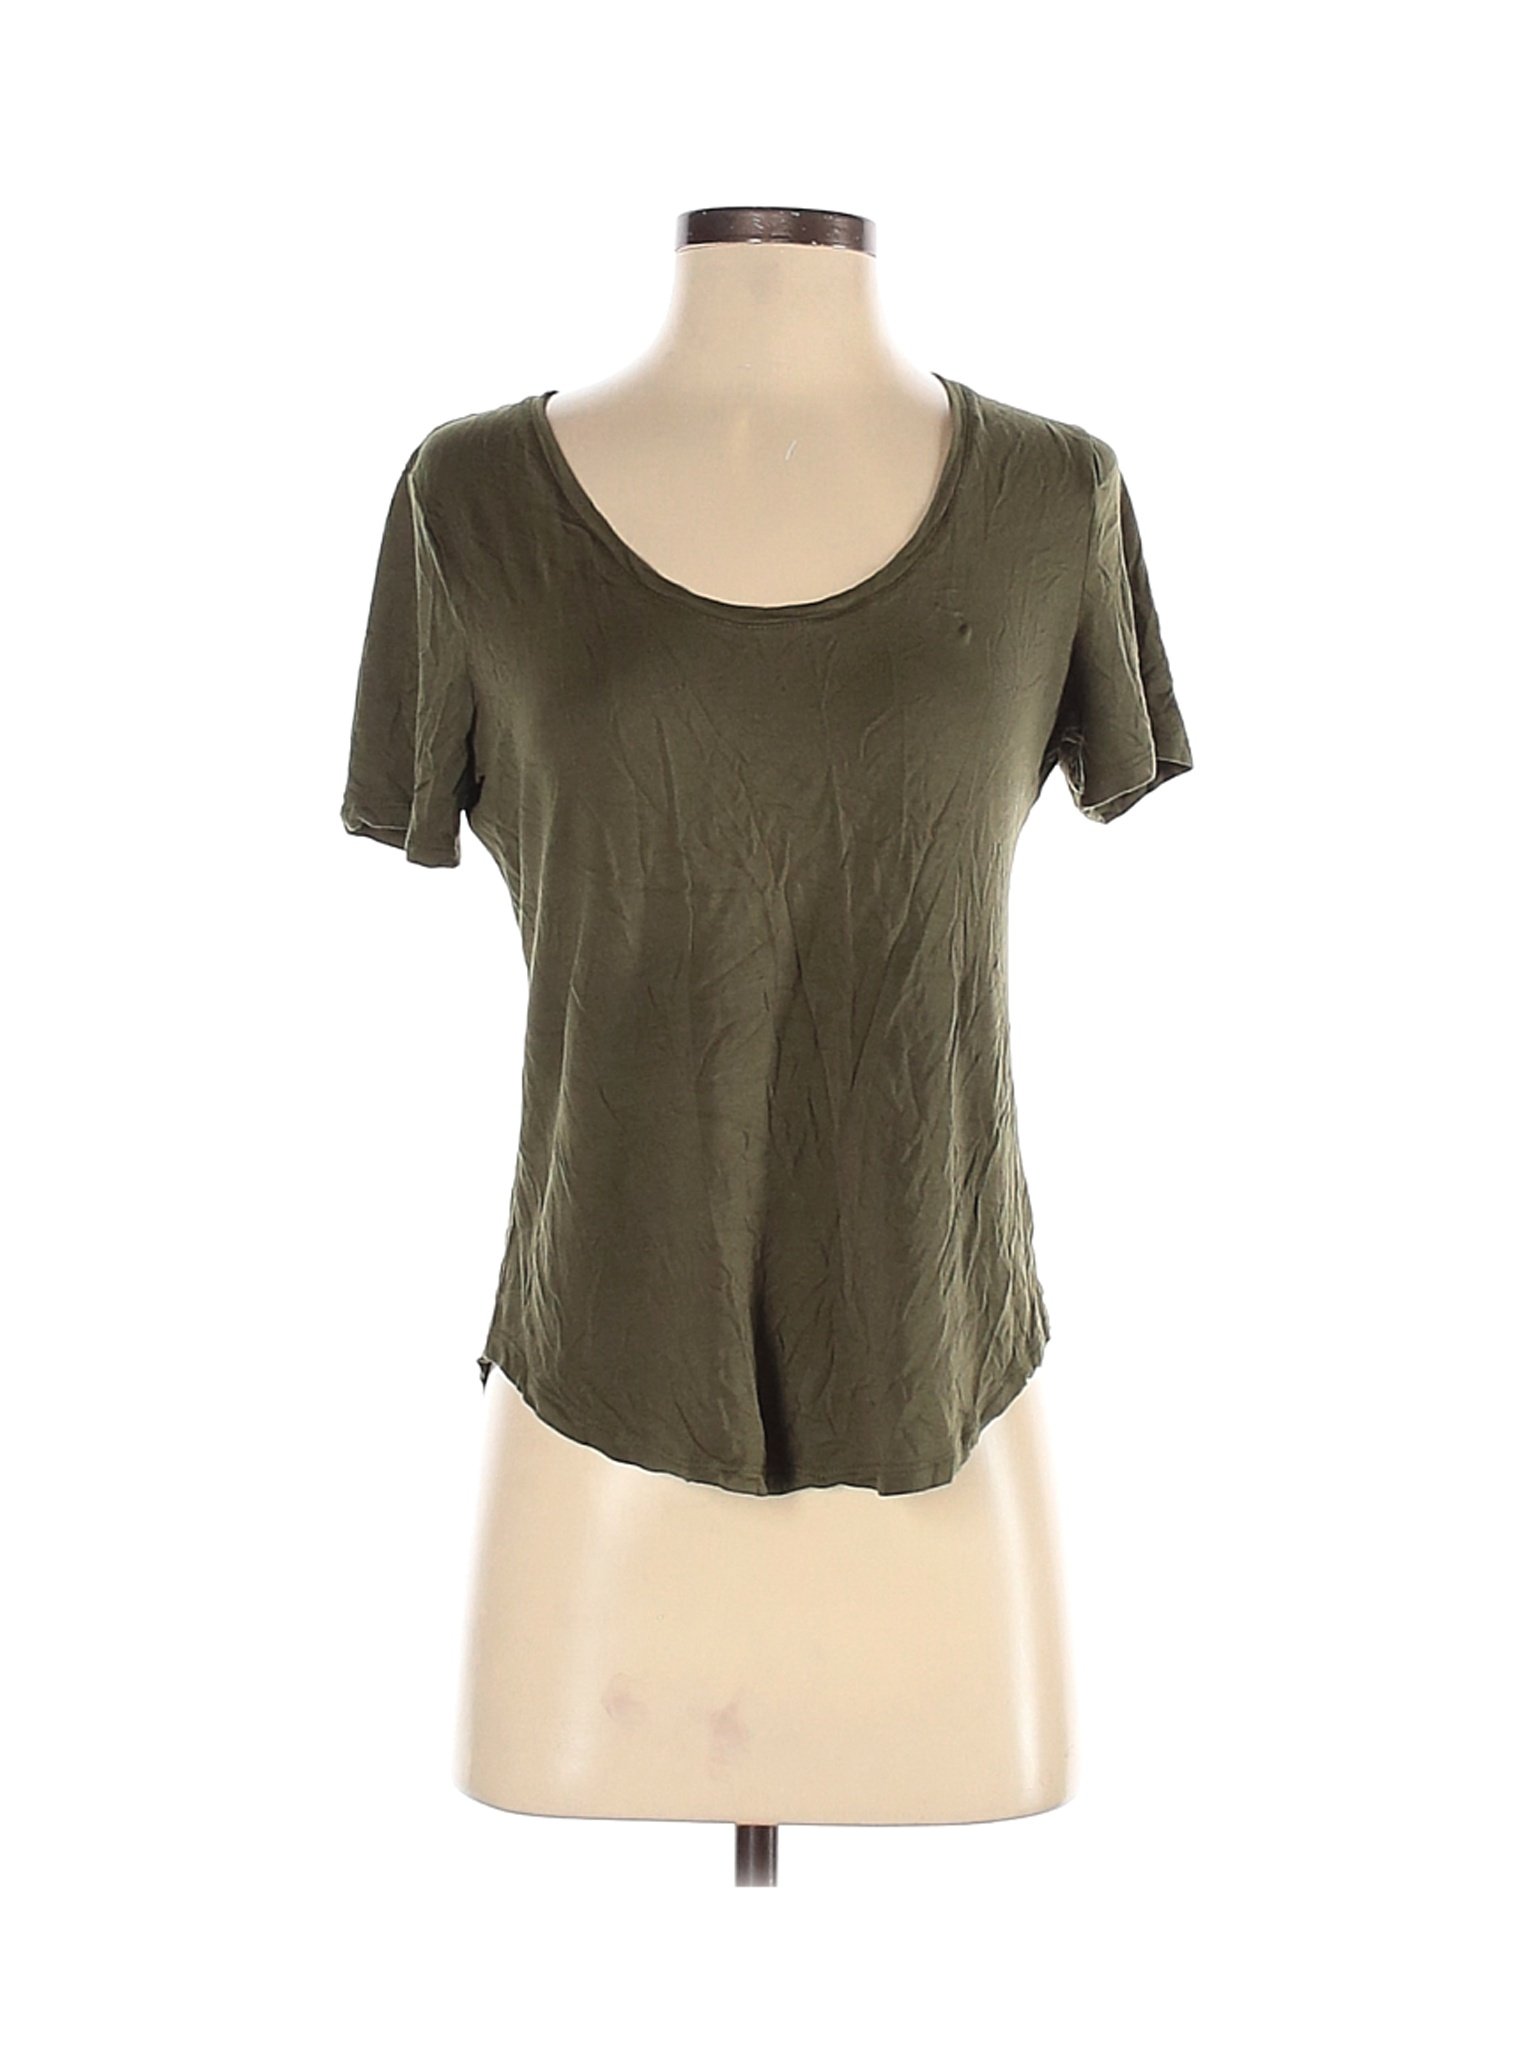 Old Navy Women Green Short Sleeve T-Shirt S | eBay